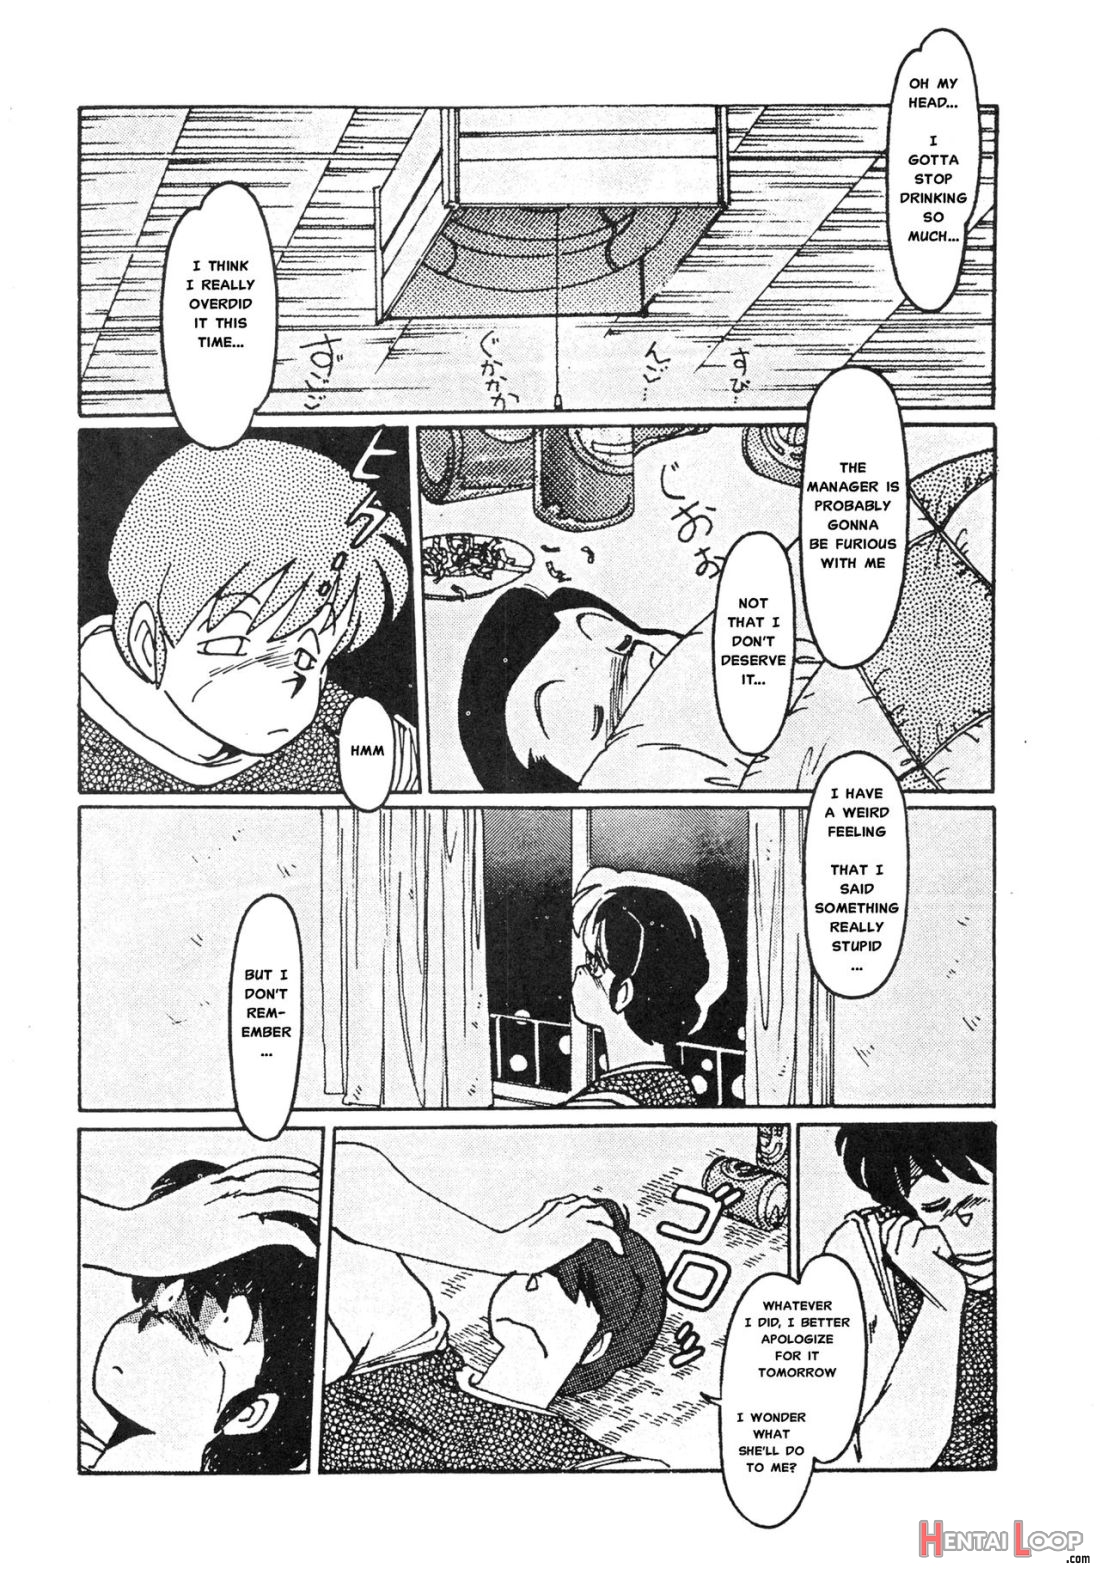 Yume Ka Utsutsu Ka page 8